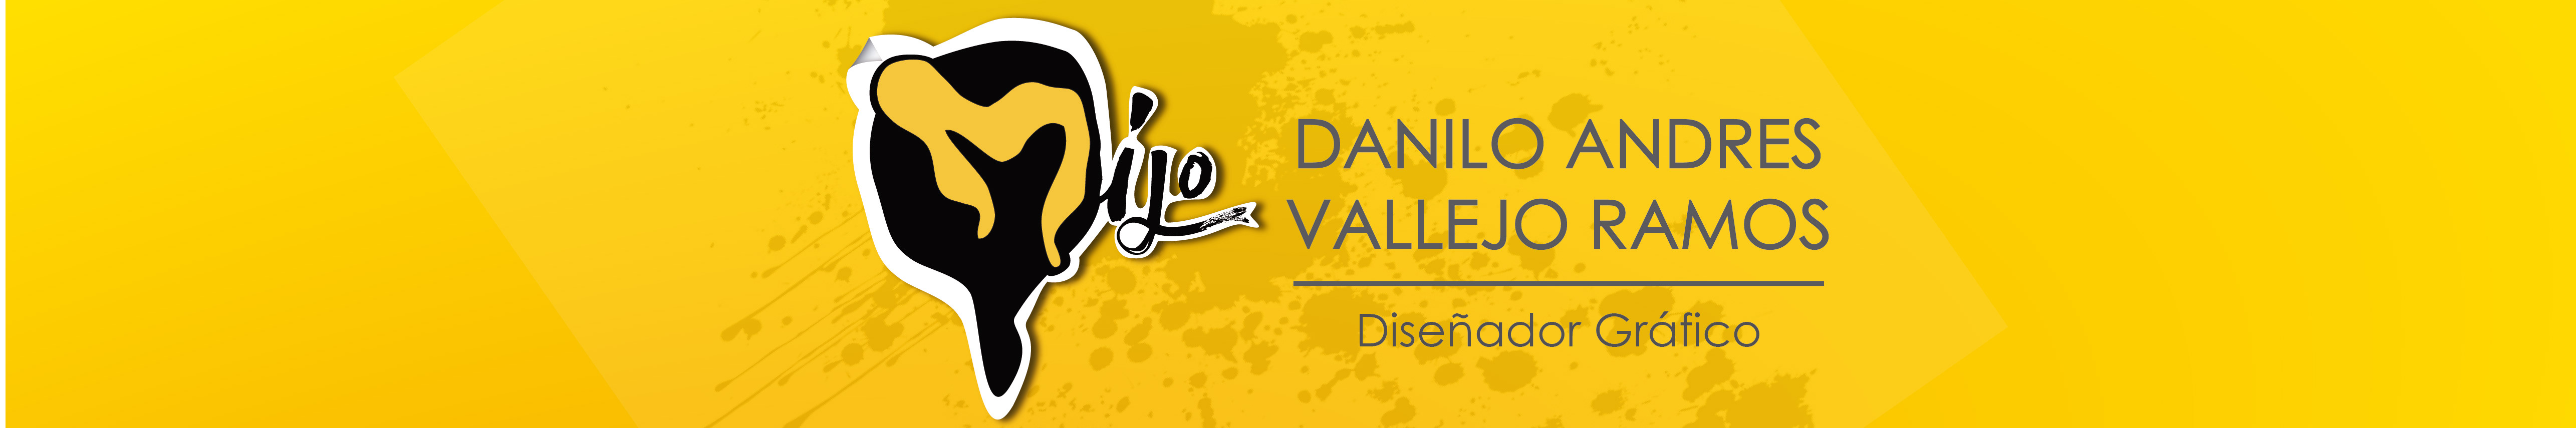 Danilo Andres Vallejhttps://www.behance.net/Danilomiloo's profile banner